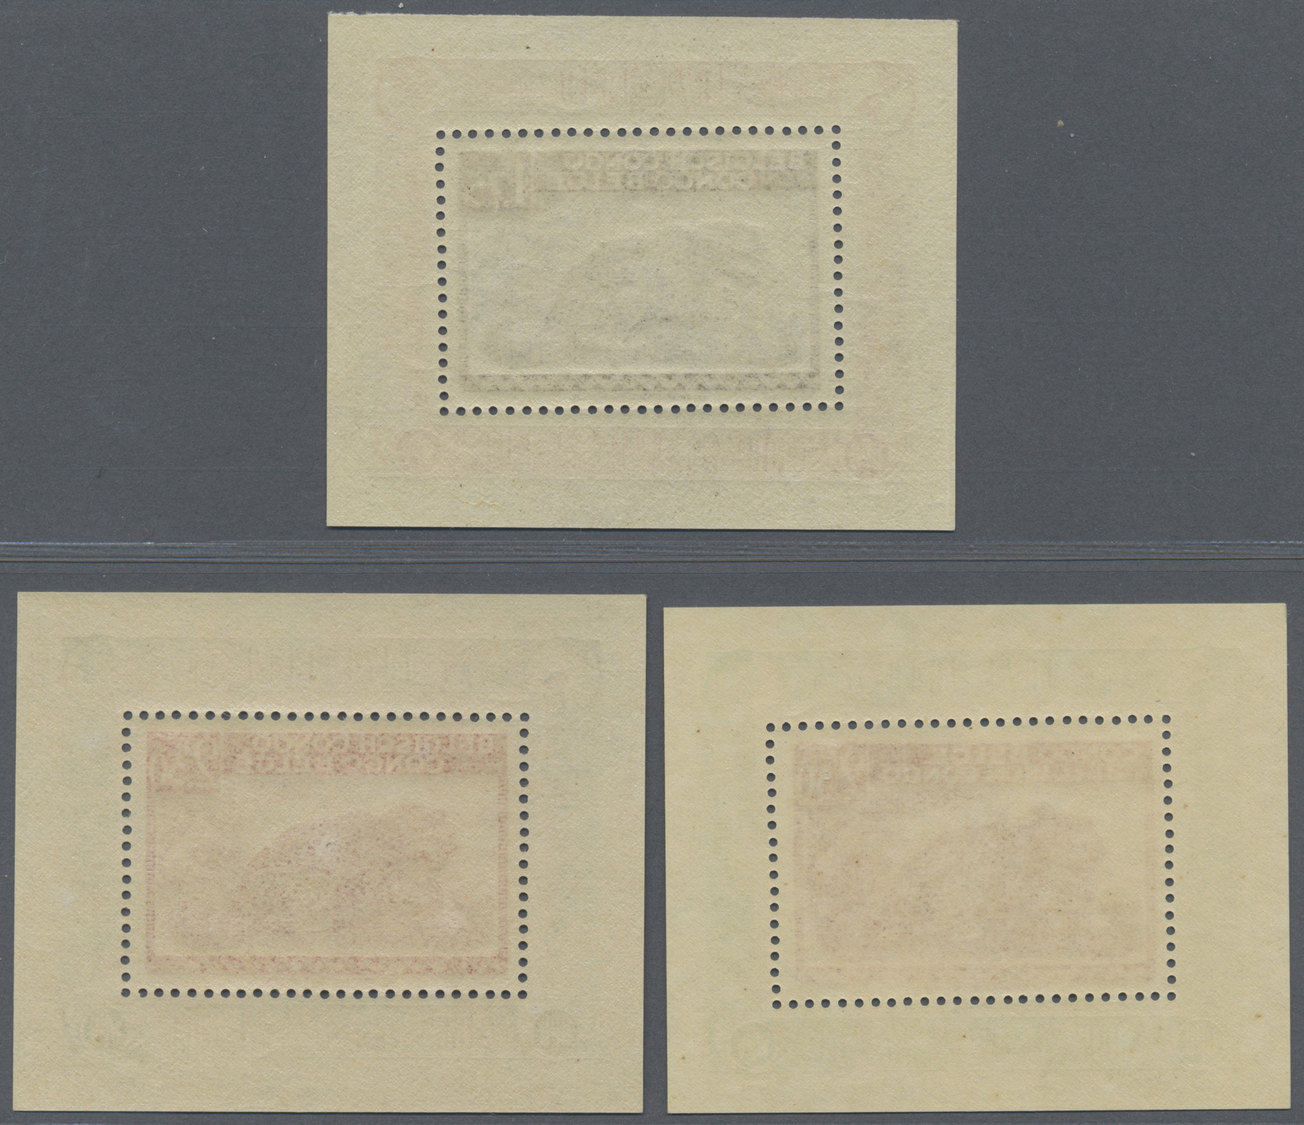 Belgisch-Kongo: 1943, Set of totally 12 different souvenir sheets Belgisch Kongo Bl. 3-10 and Ruanda-Urundi Bl. 1-3 issu